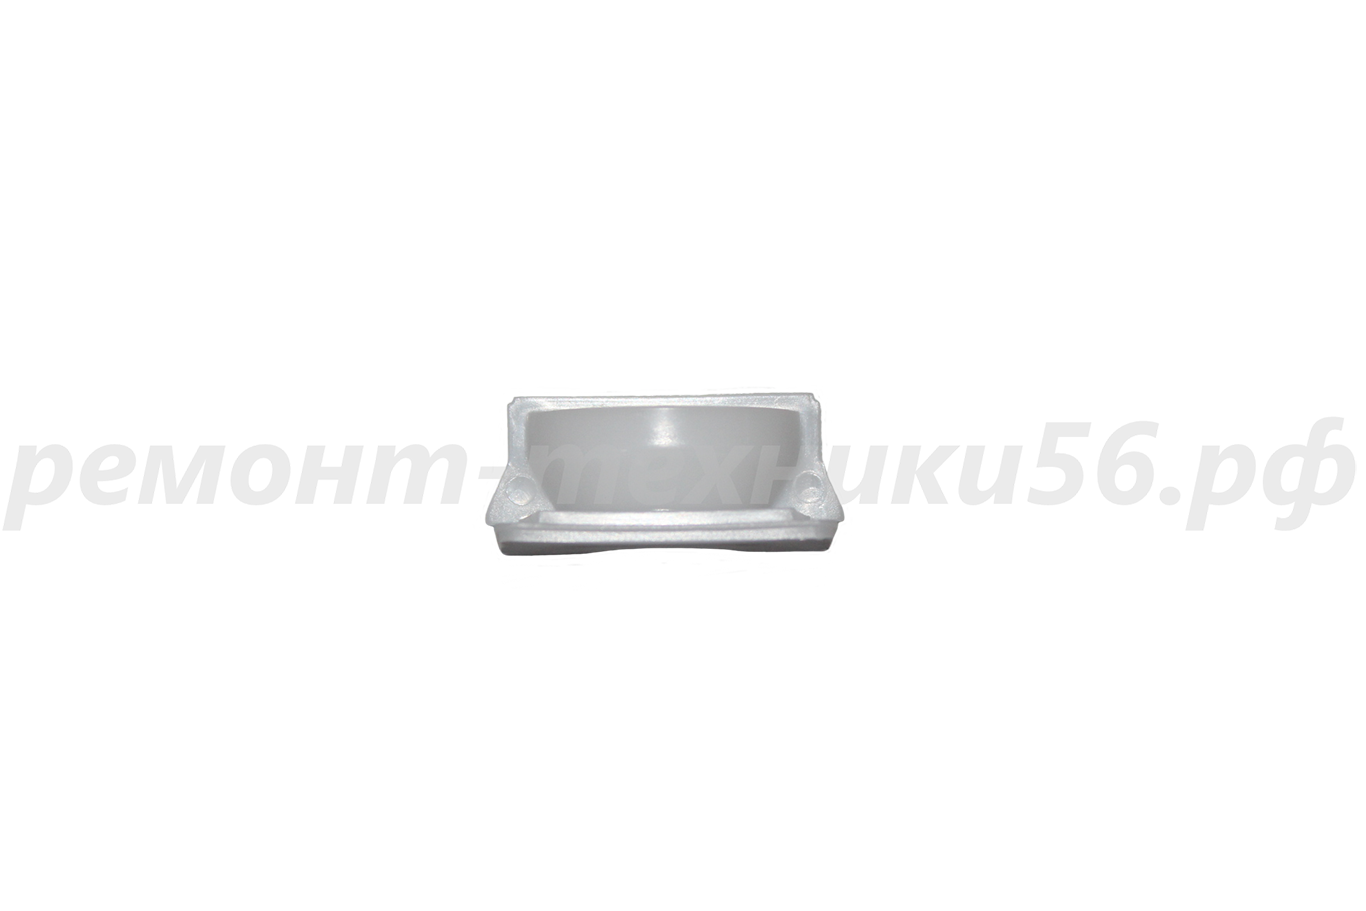 Подшипник скольжения передний Electrolux EHAW - 6515 (white) по лучшей цене фото4